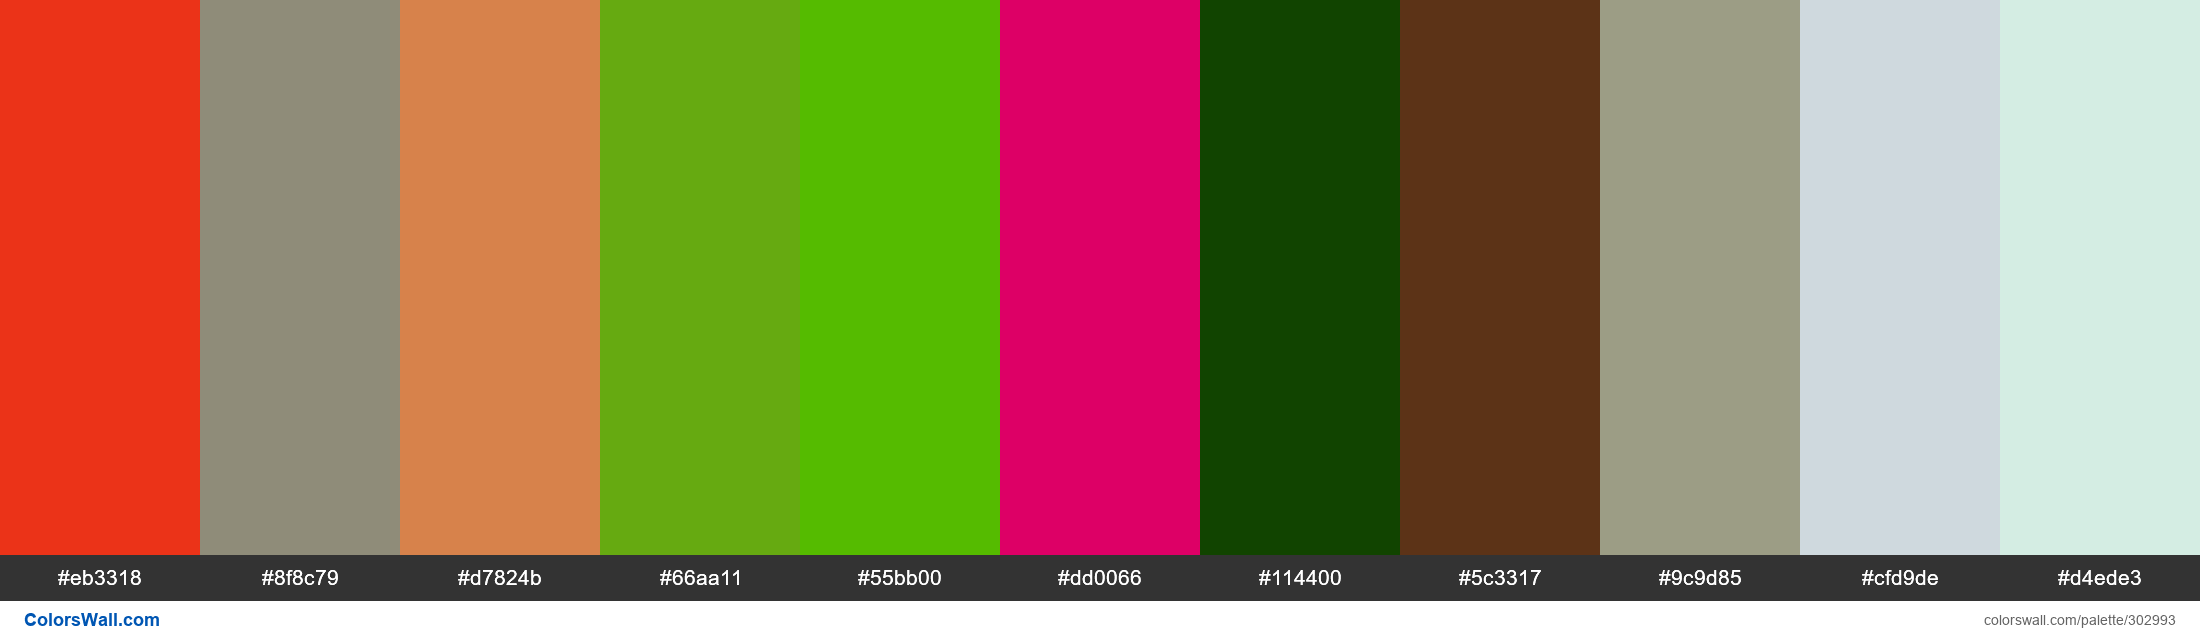 5C3317 Hex Color, RGB: 92, 51, 23